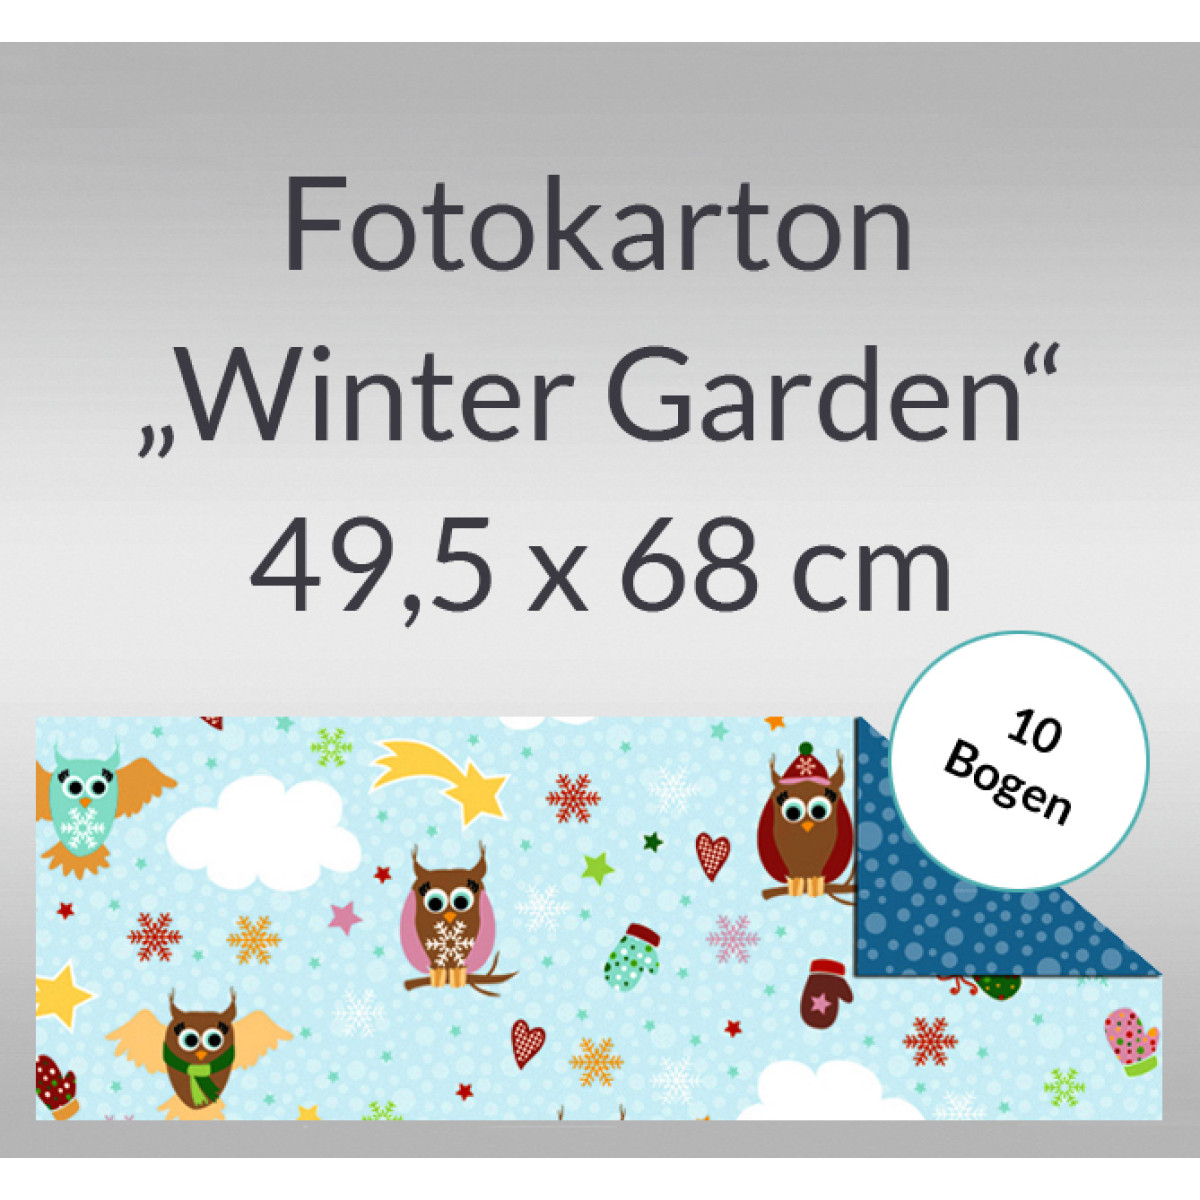 Fotokarton "Winter Garden" 49,5 x 68 cm Eulen - 10 Bogen